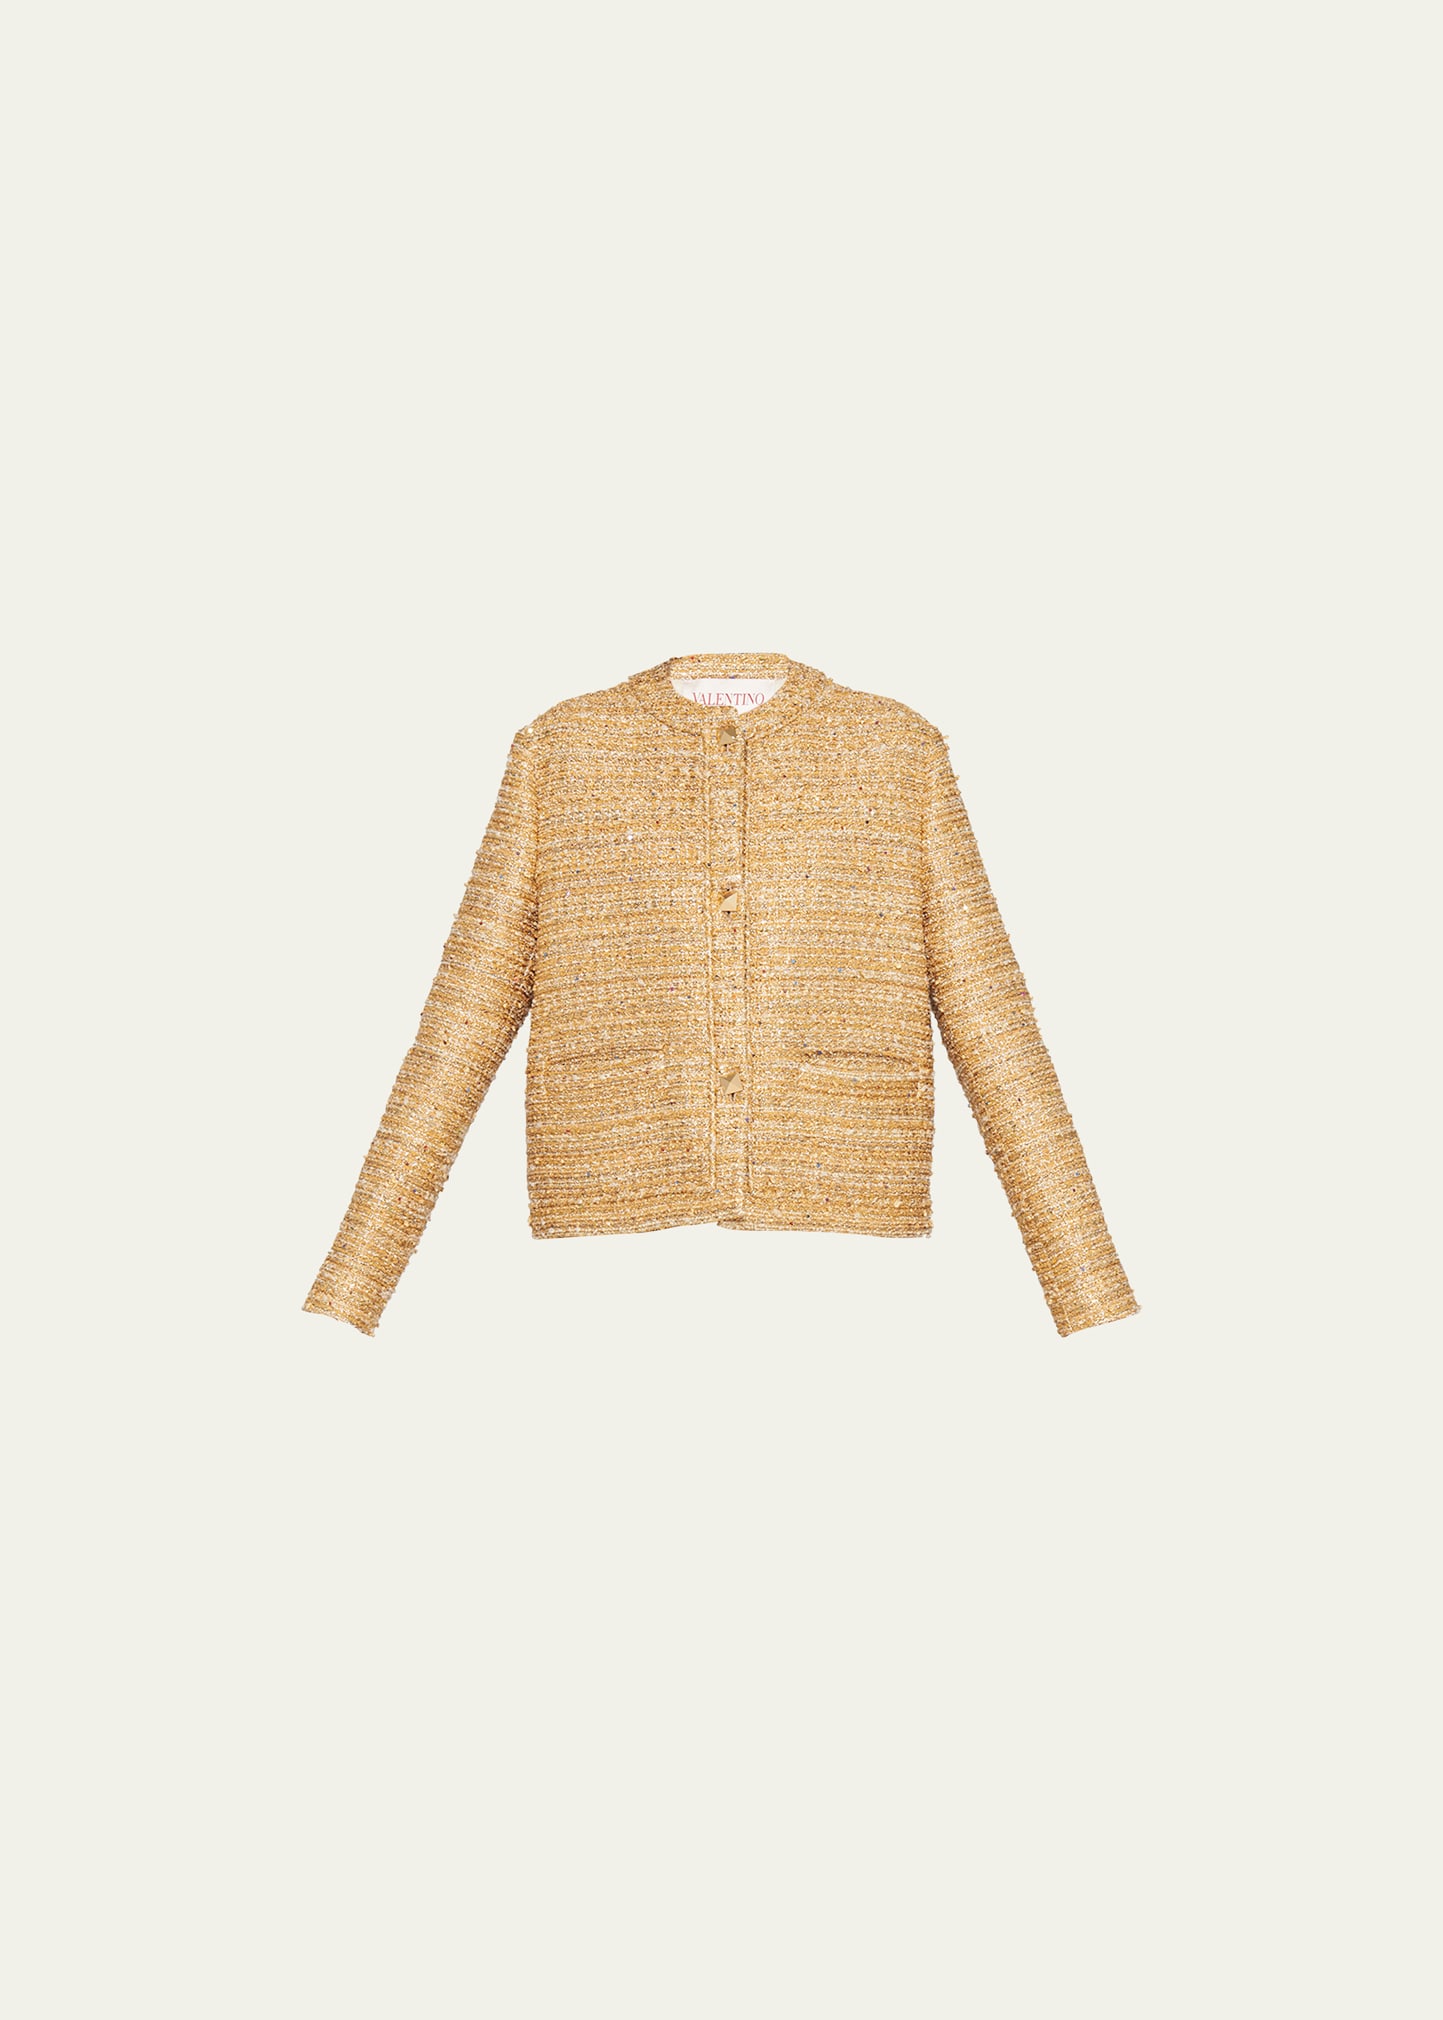 Embellished Gold Tweed Jacket